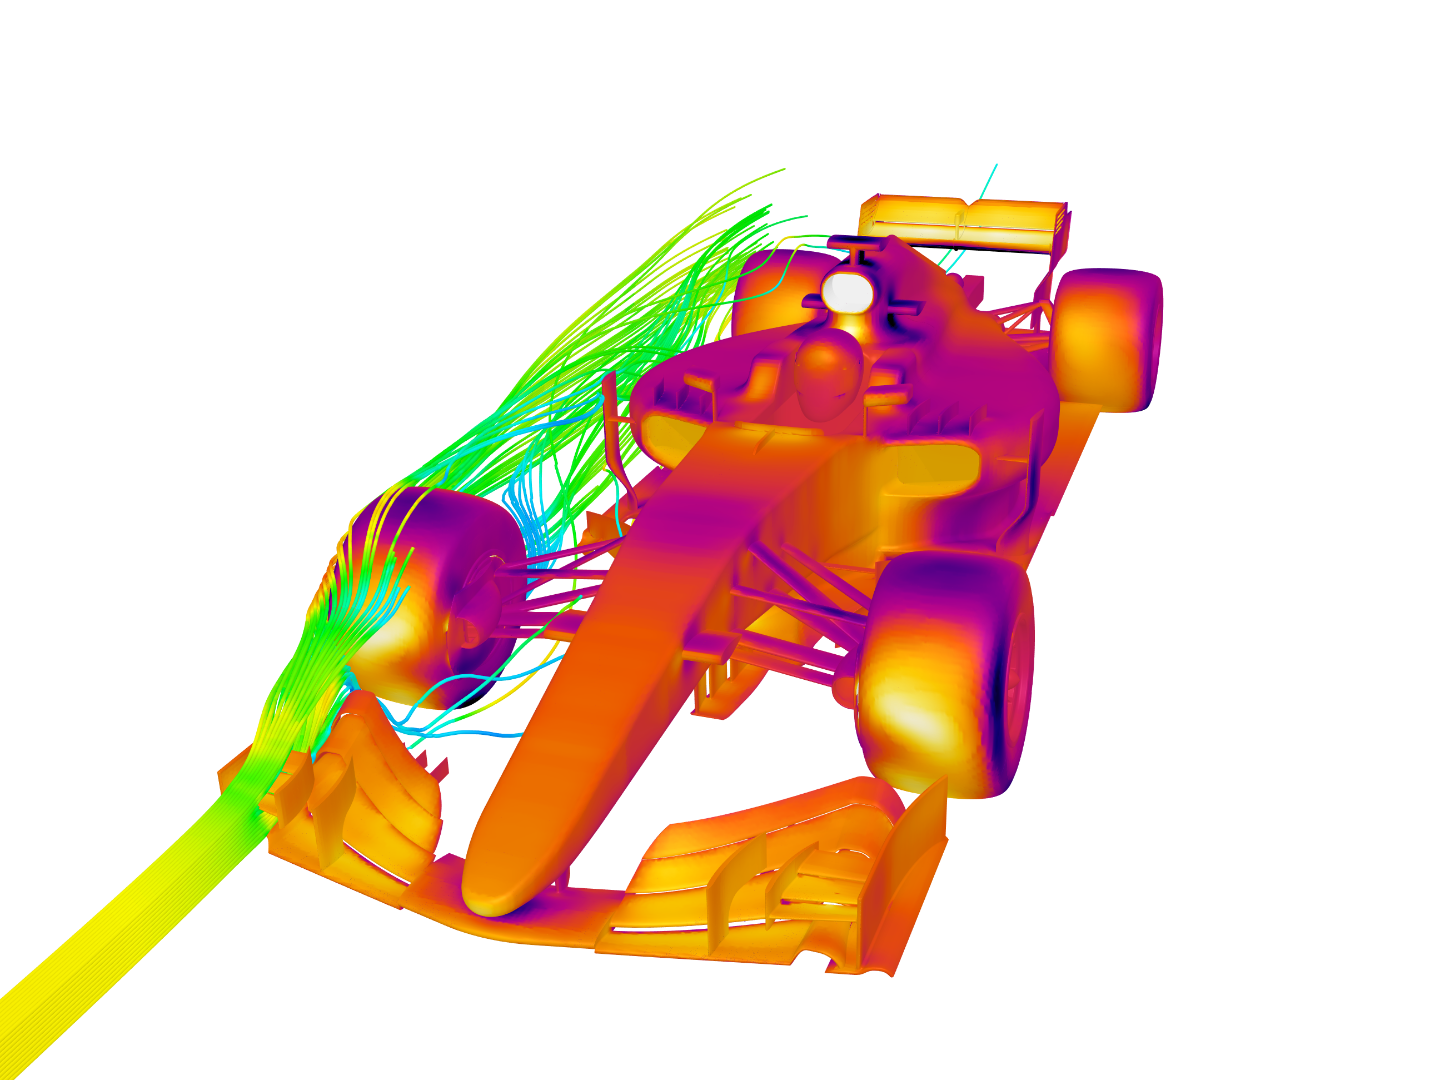 Copy of F1 Aerodynamic Analysis image